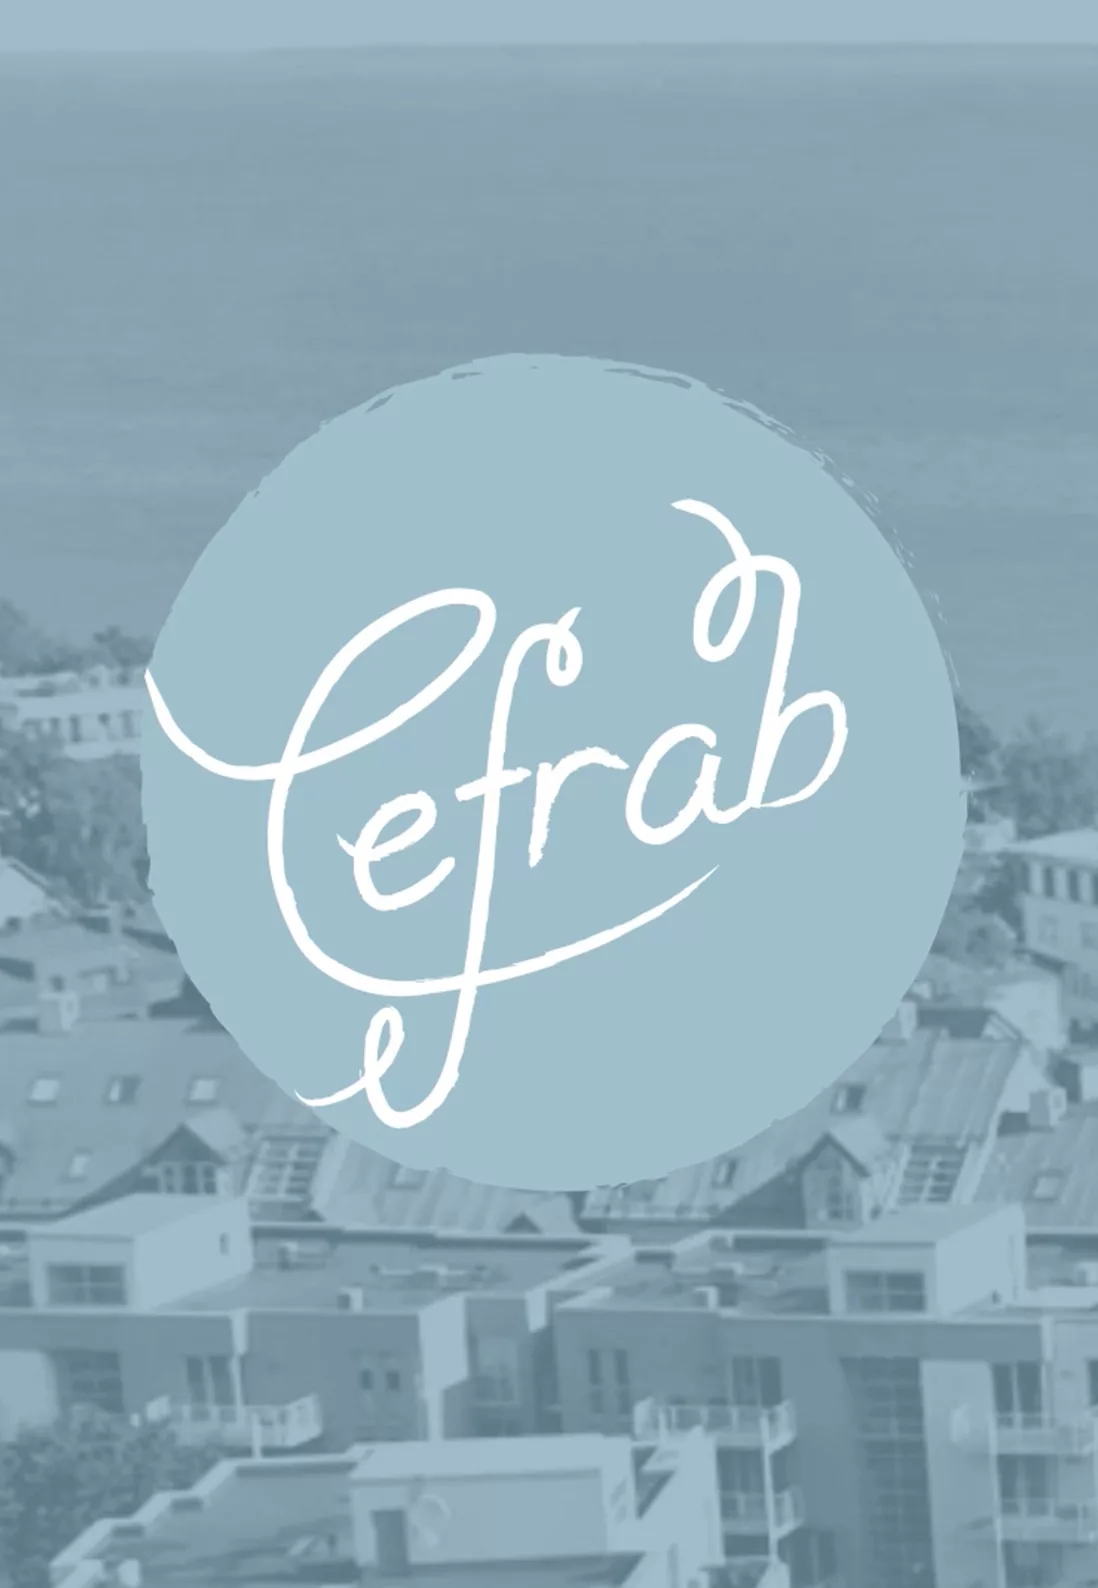 Cefrab logotyp